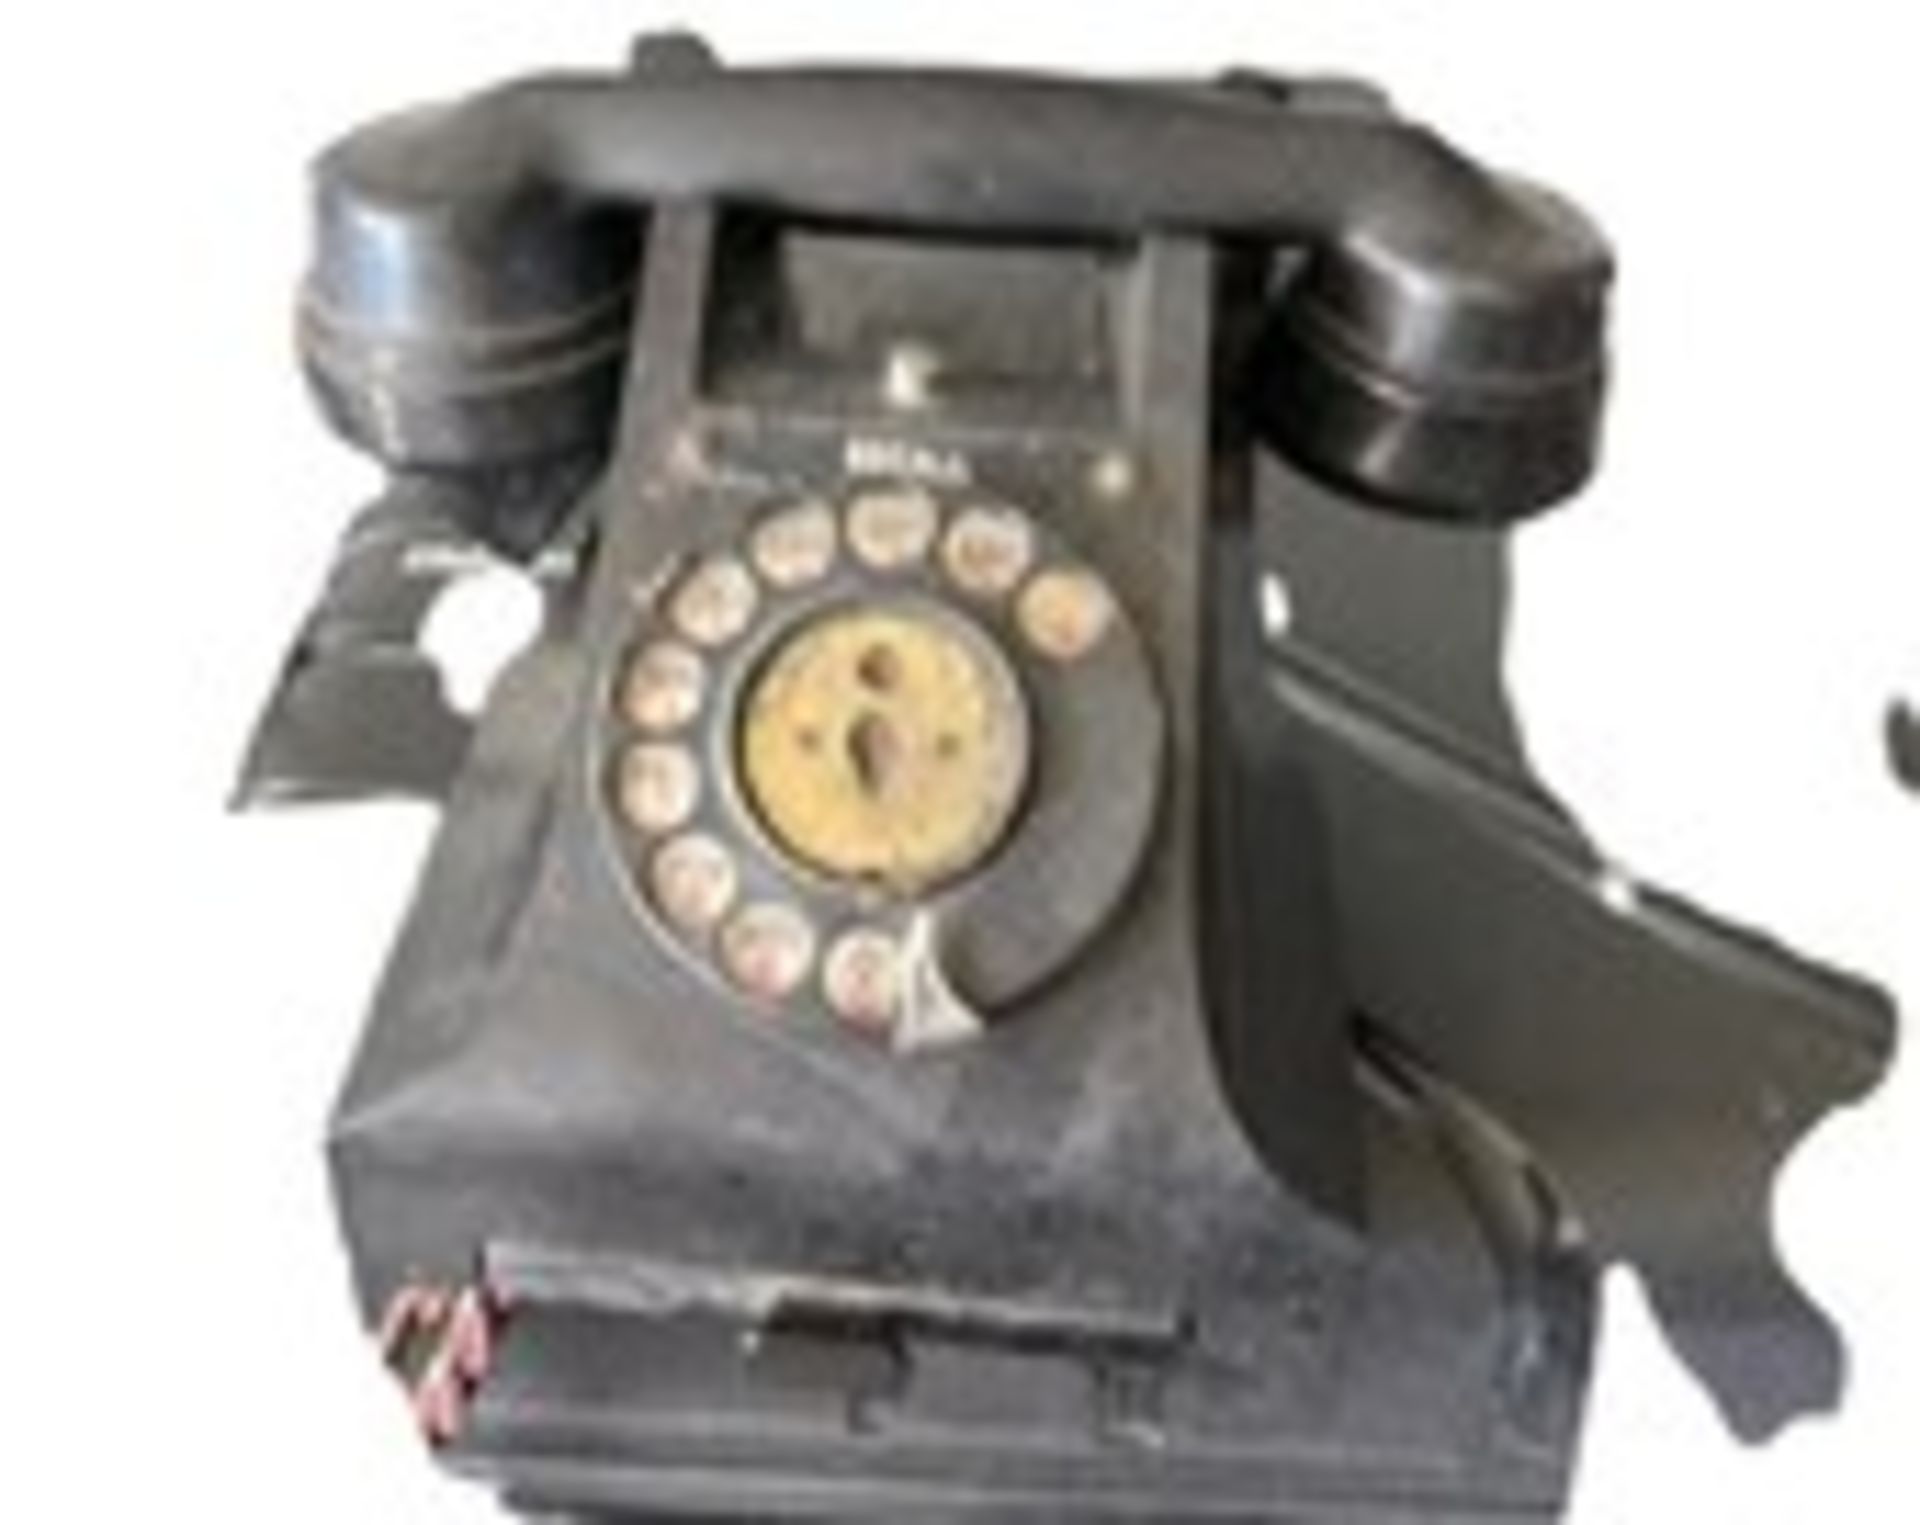 1956 GPO bakelite matt black dial telephone